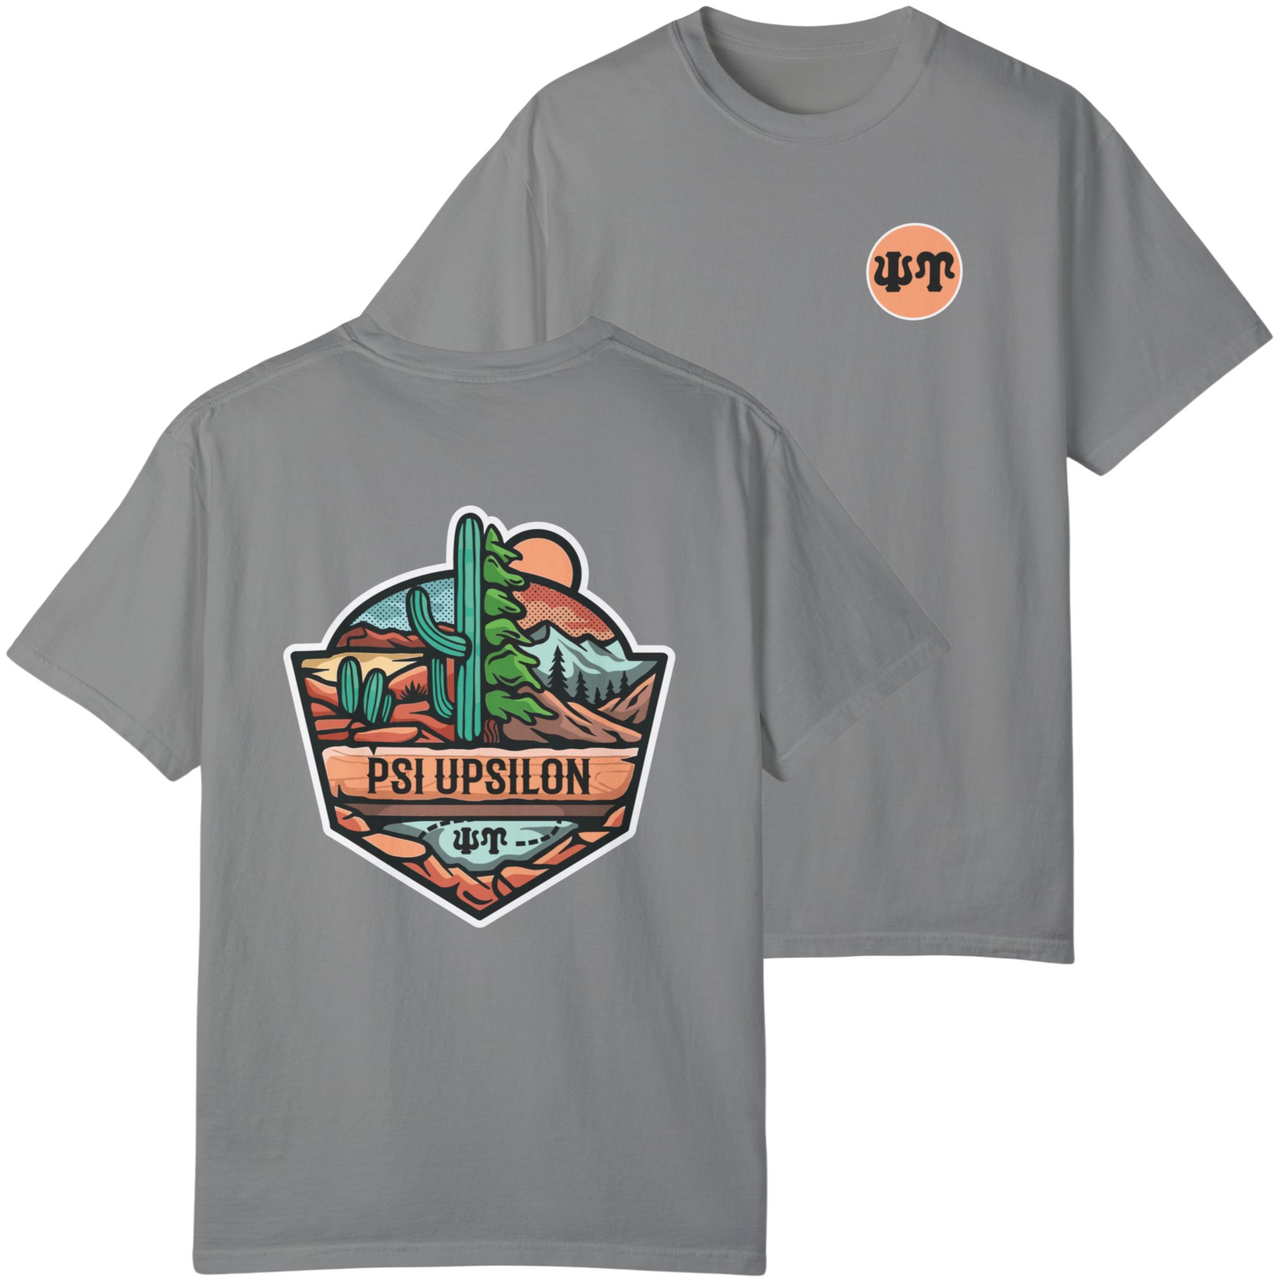 Psi Upsilon Graphic T-Shirt | Desert Mountains